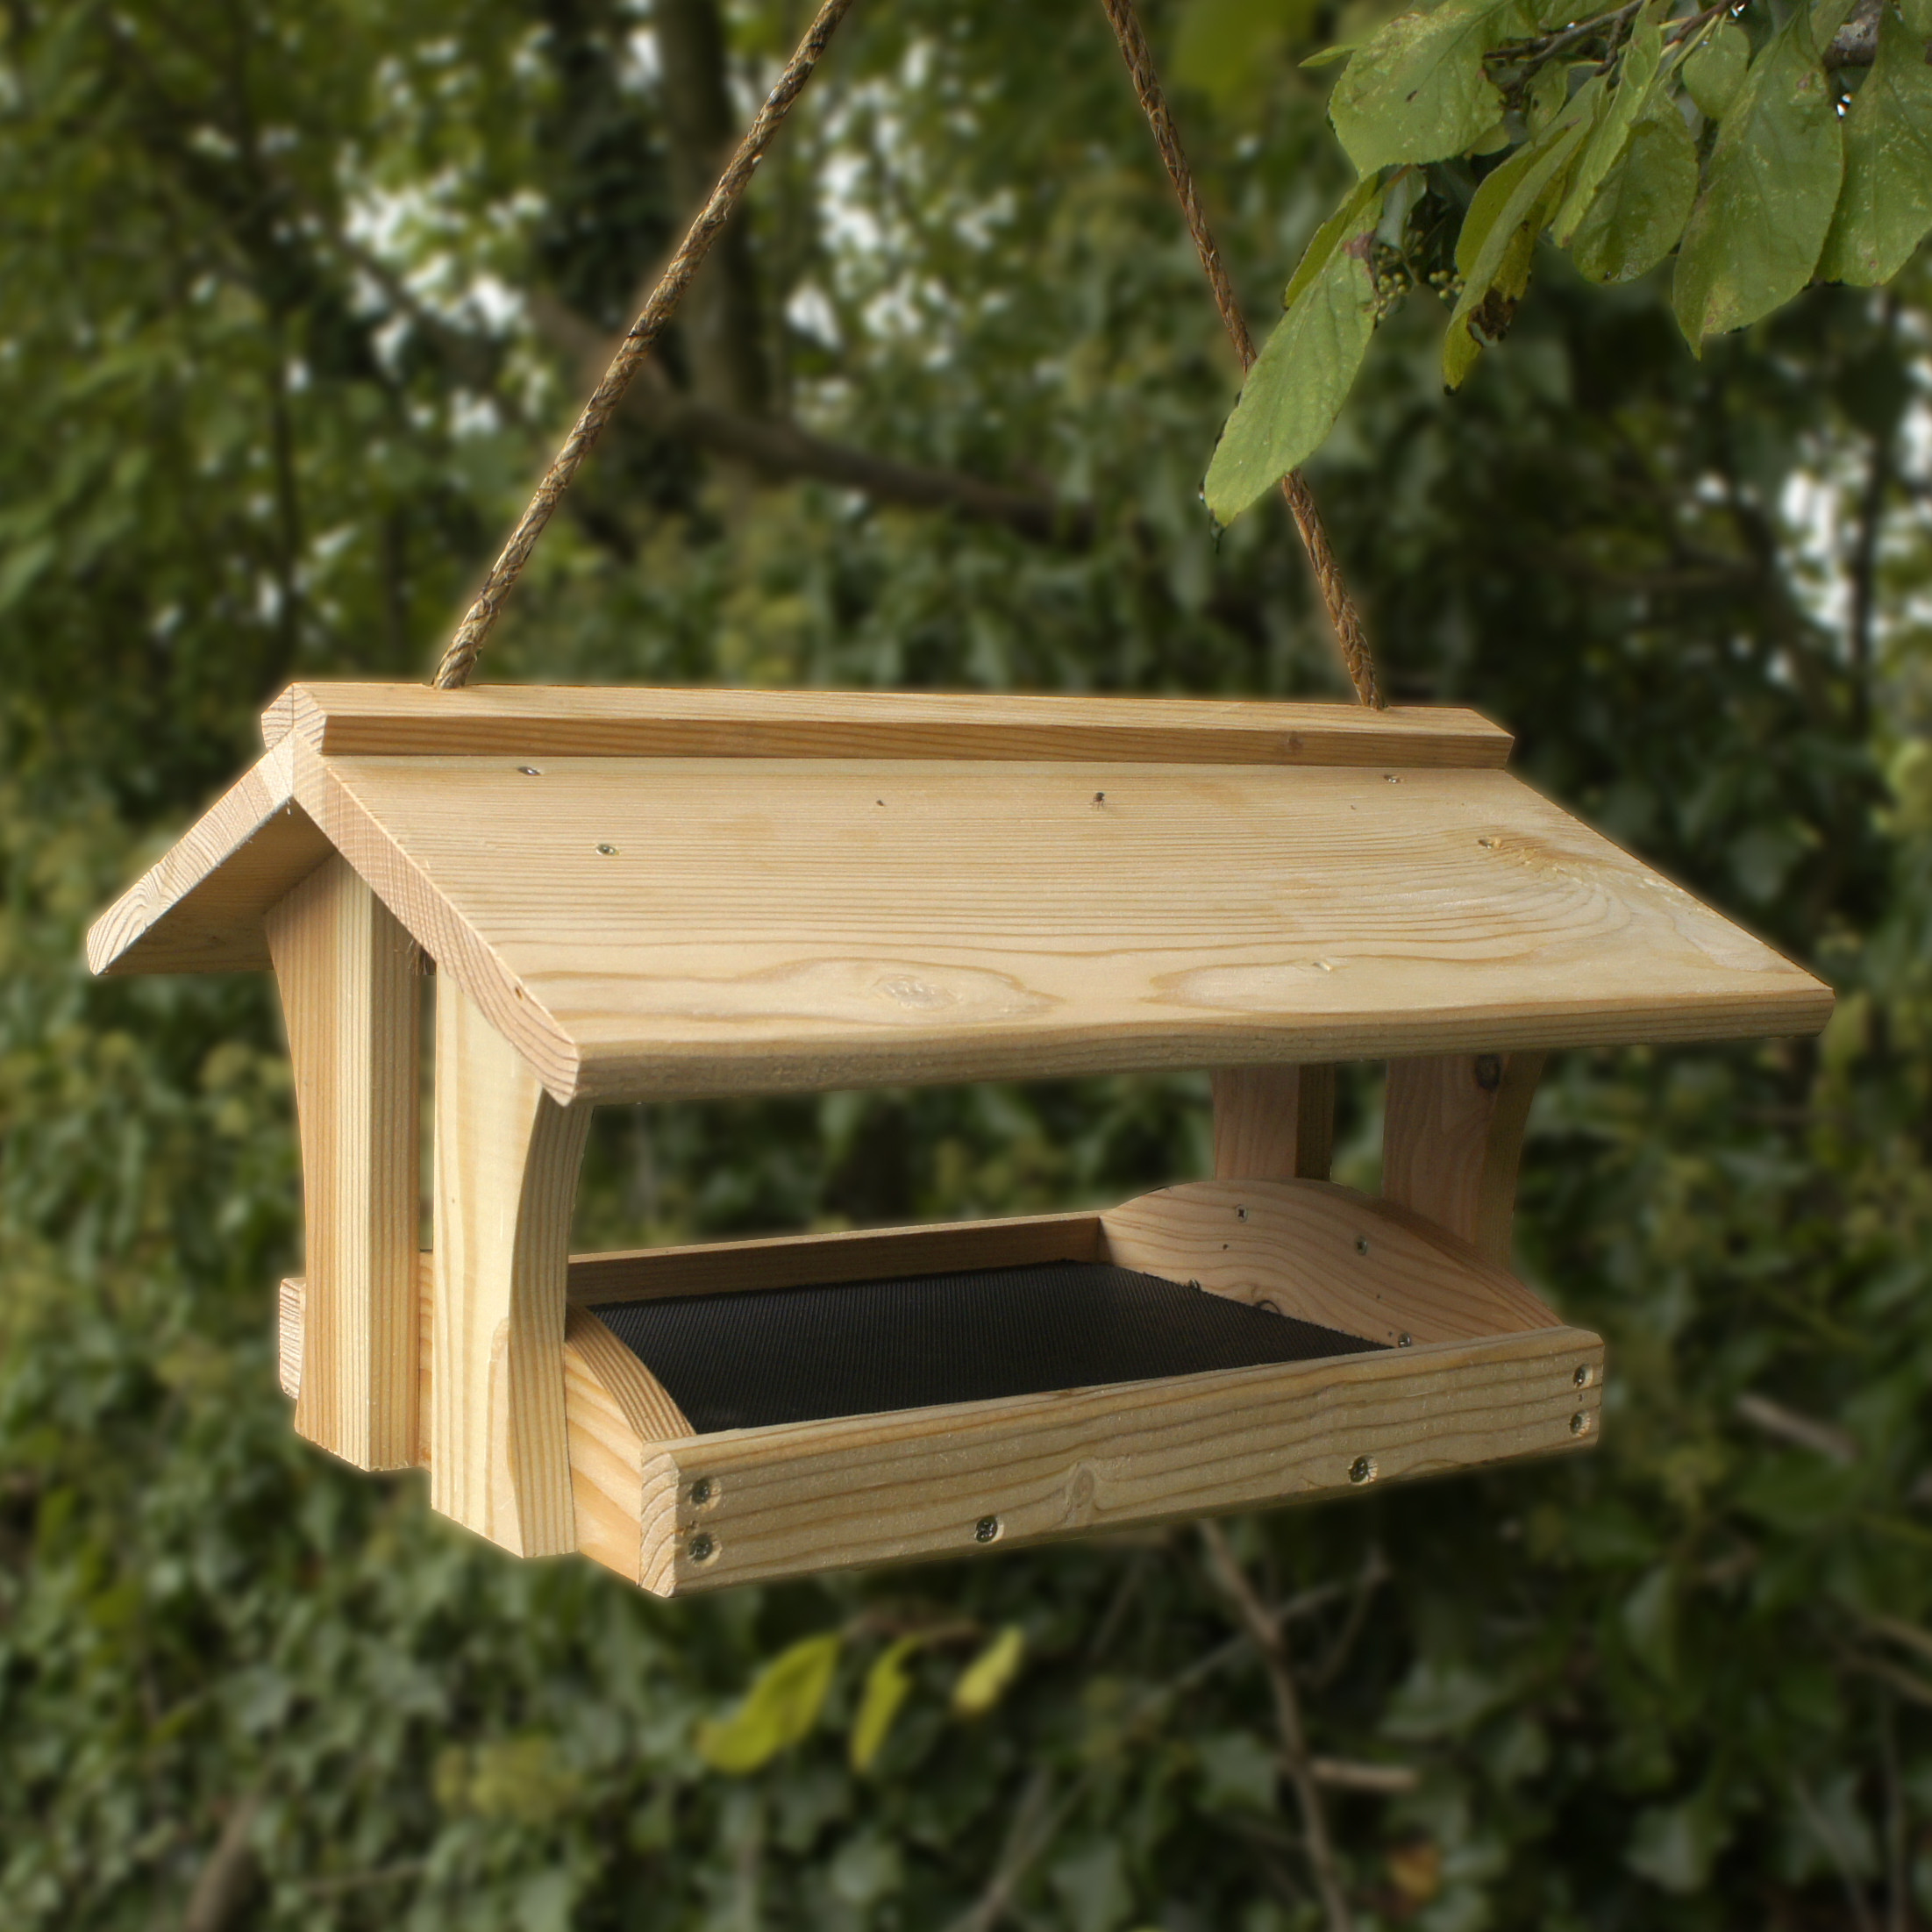 Best ideas about DIY Wooden Bird Feeders
. Save or Pin DIY Bird Feeders on Pinterest Now.